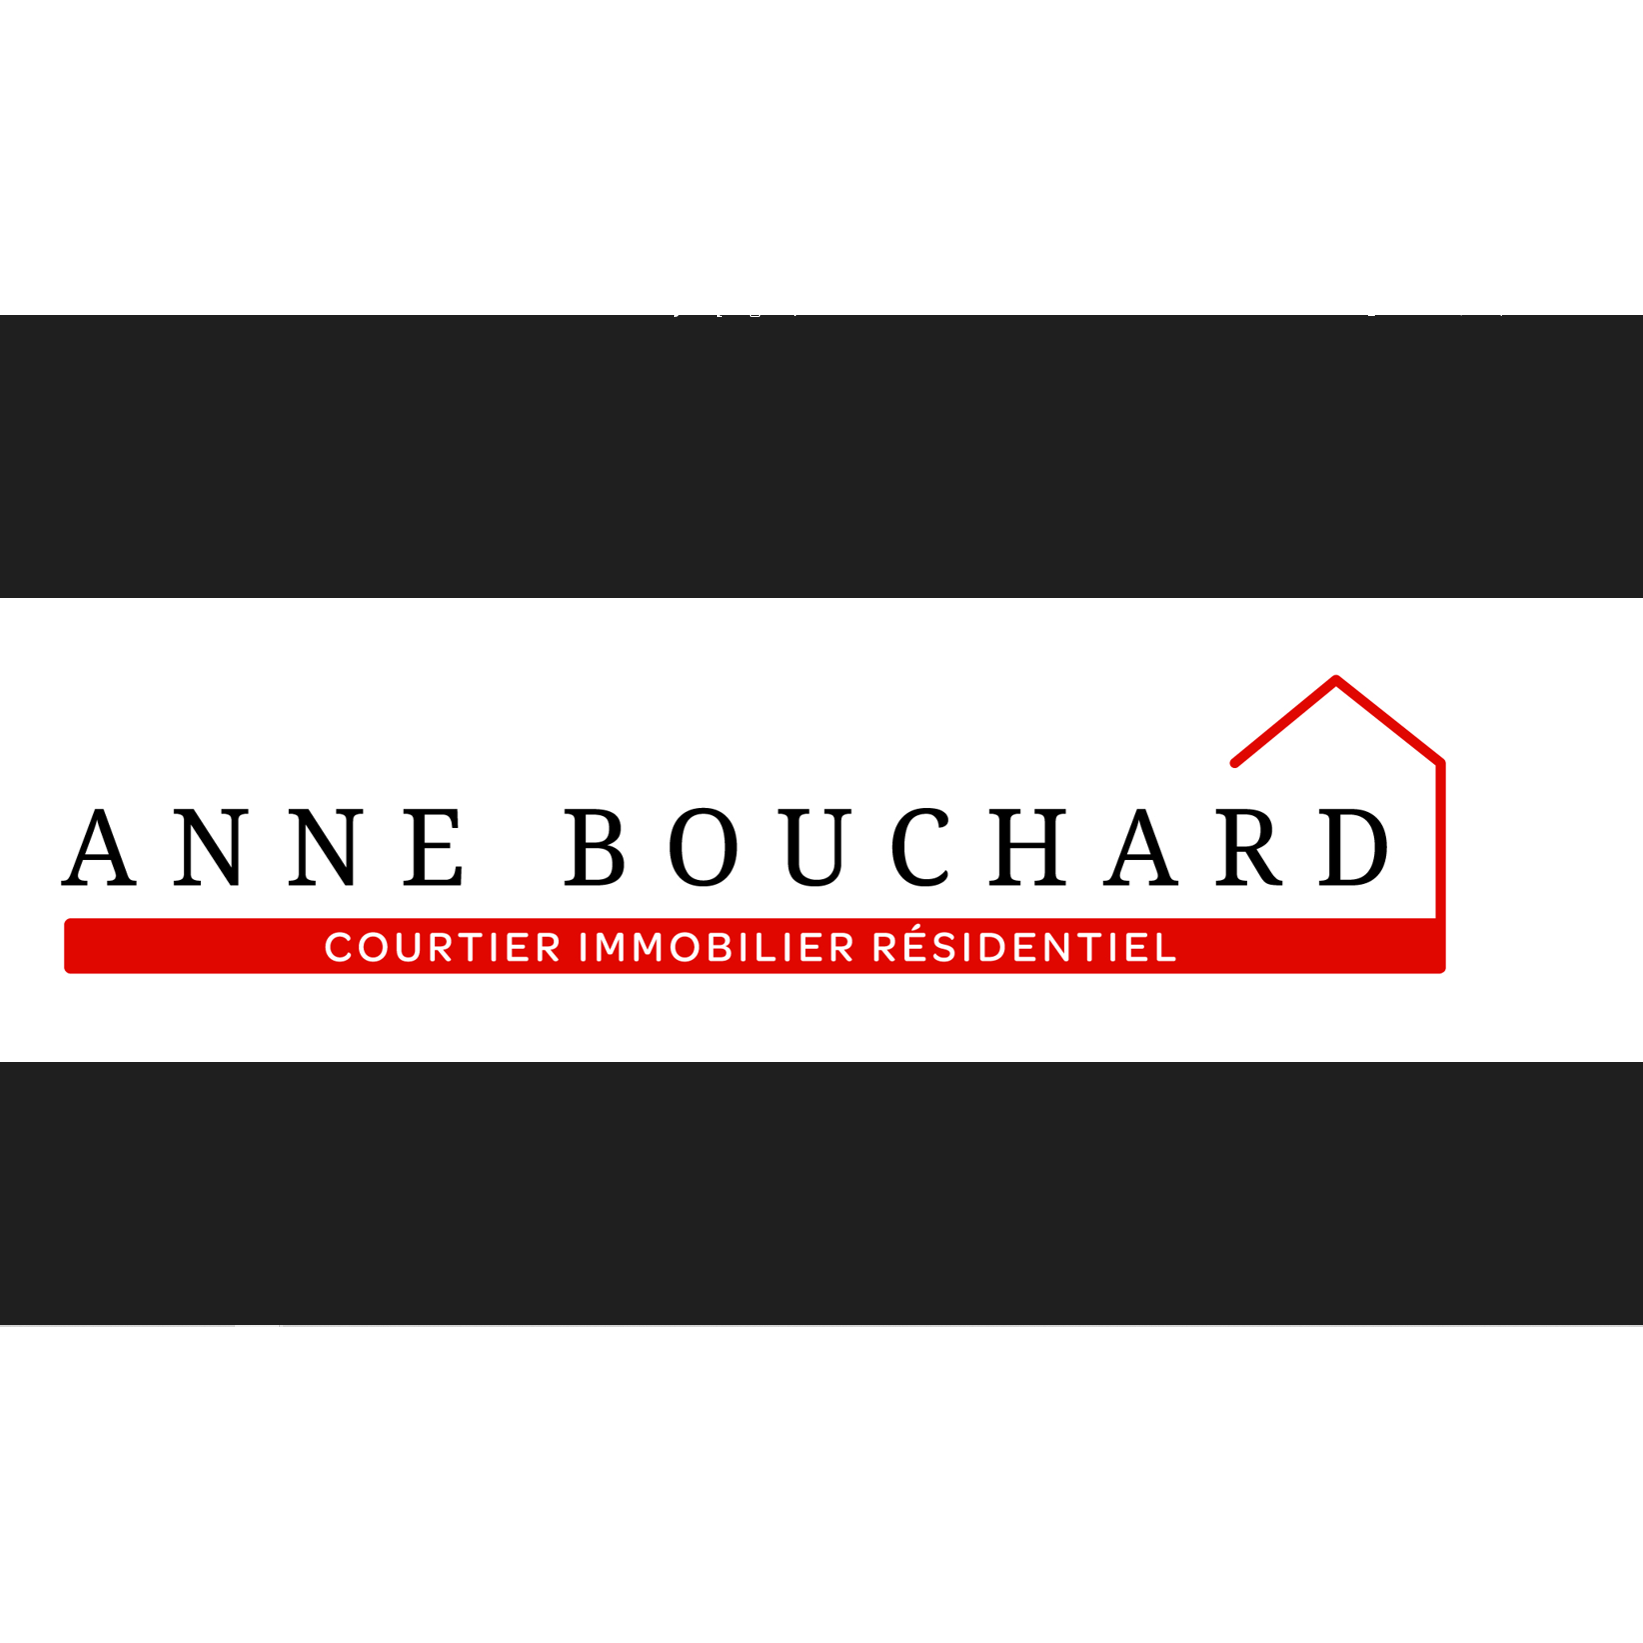 Anne Bouchard Courtier Immobilier Résidentiel